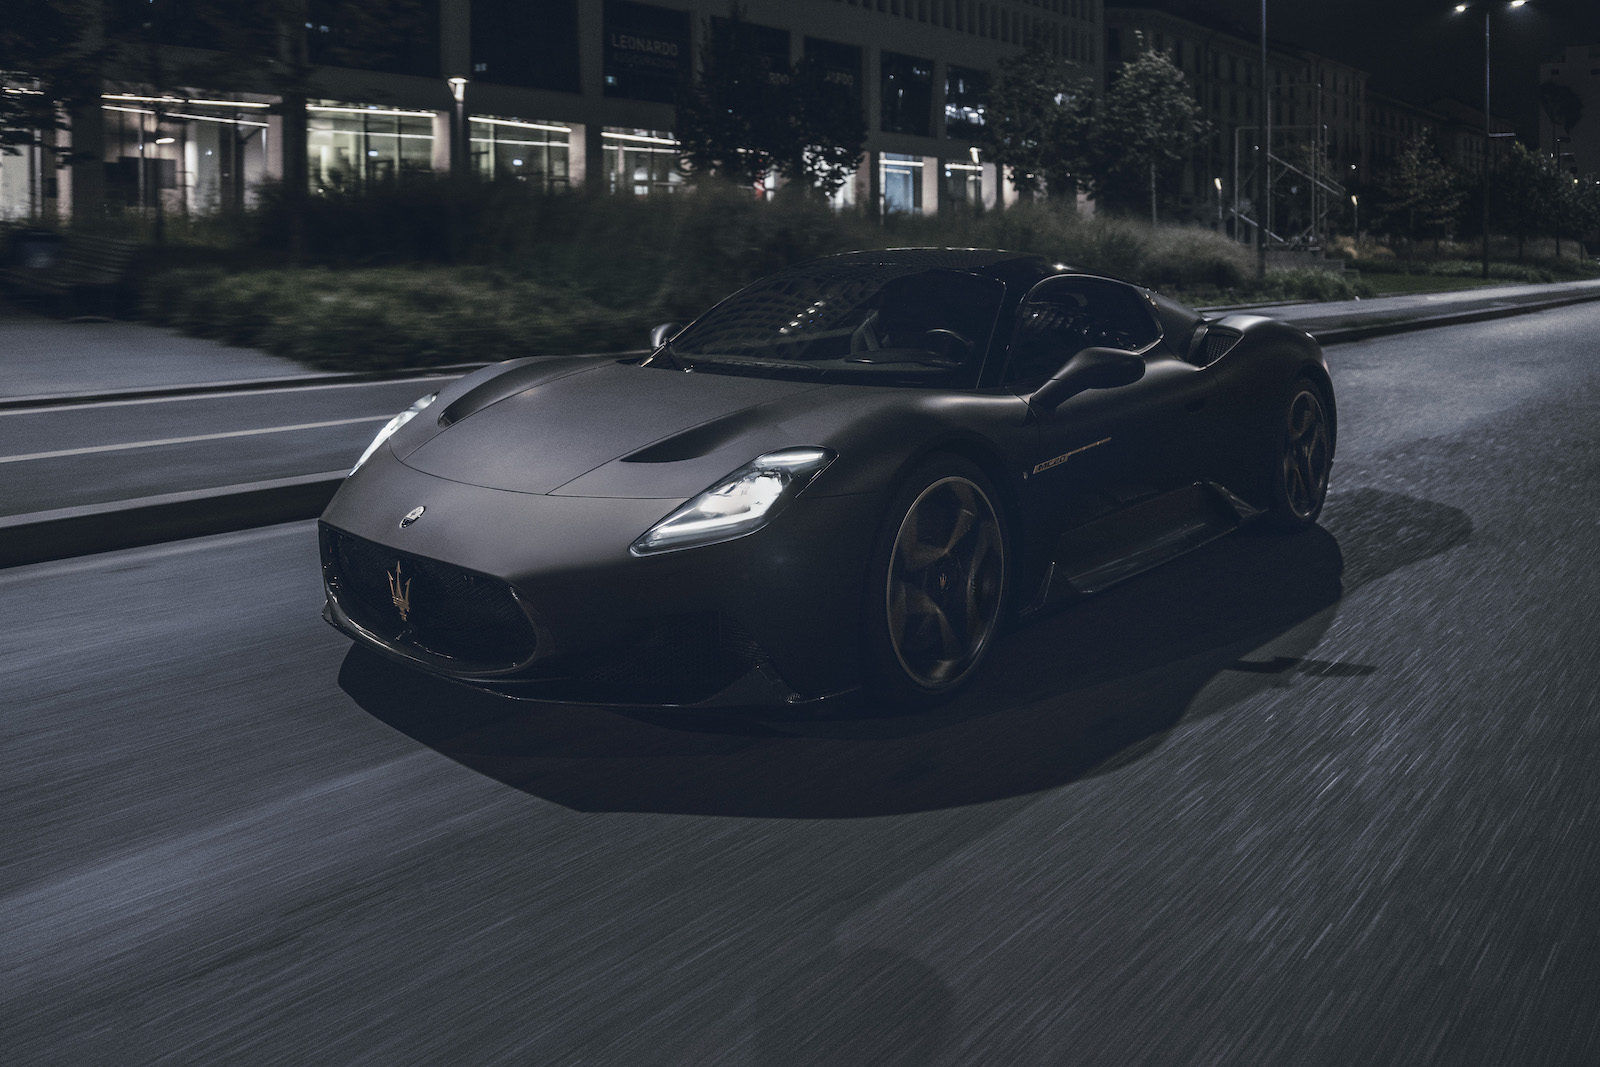 imagen 2 de MC20 Notte, la bestia nocturna de Maserati.